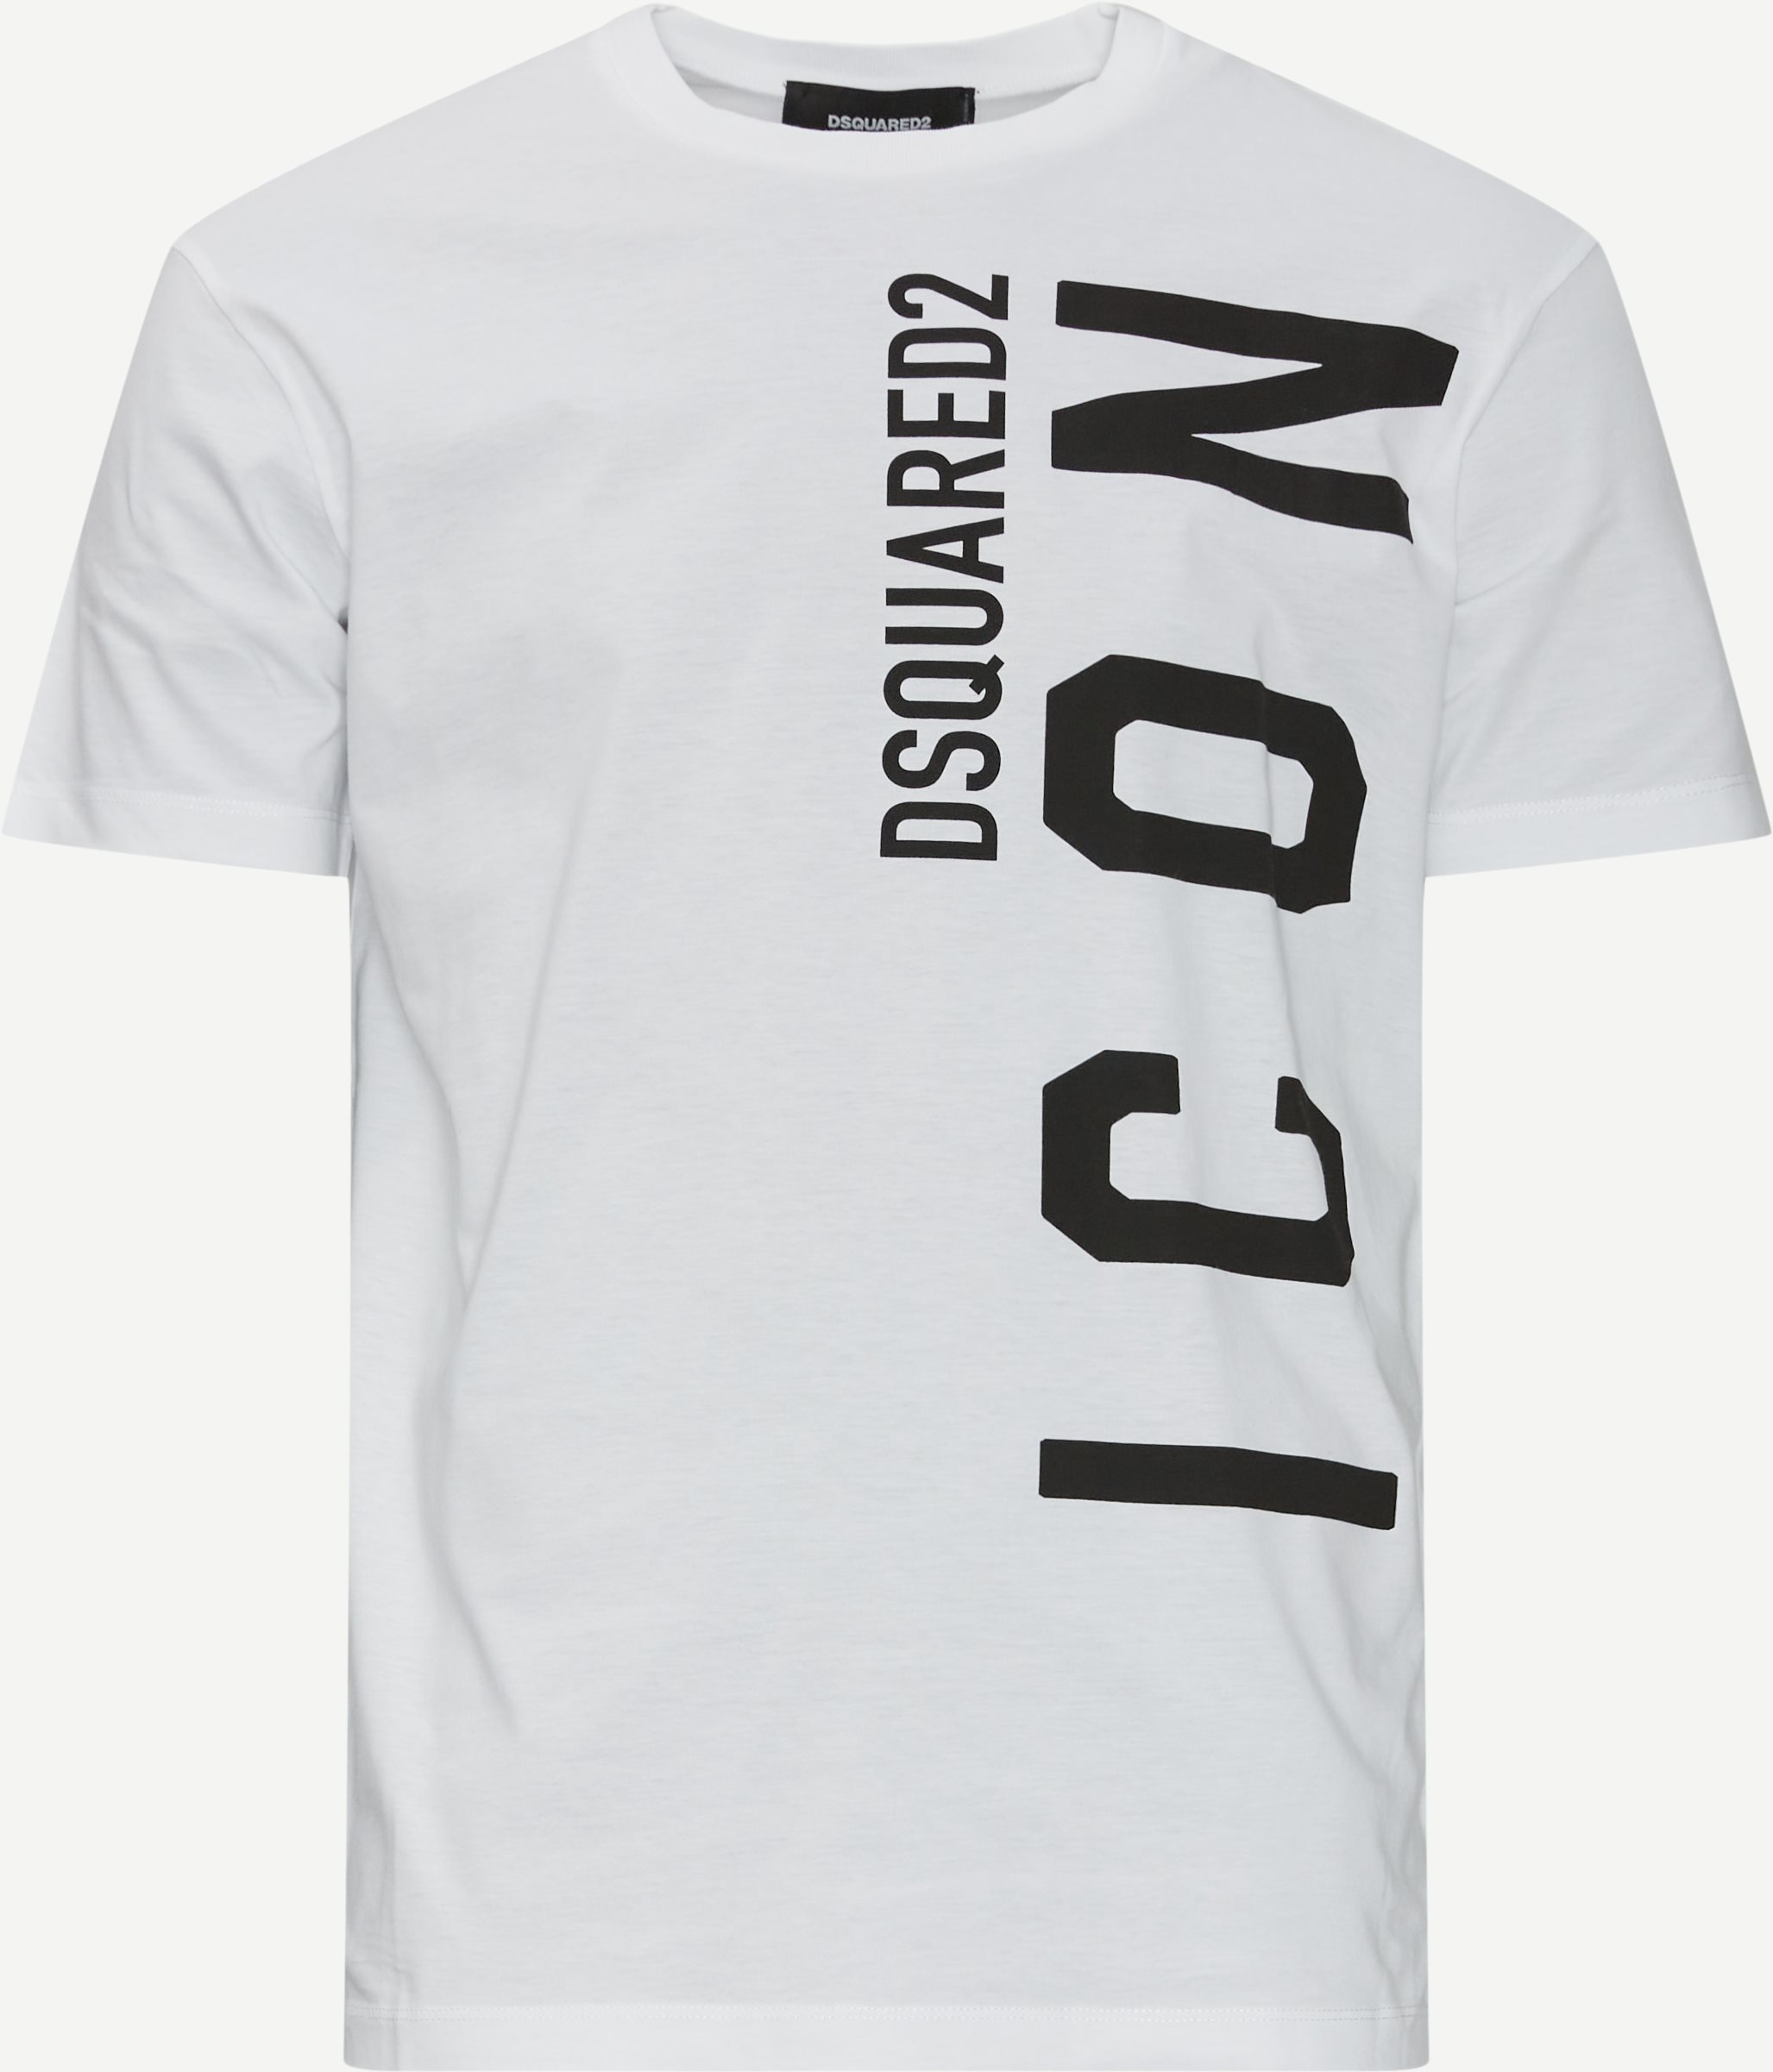 Icon Cool Tee - T-shirts - Regular fit - Hvid